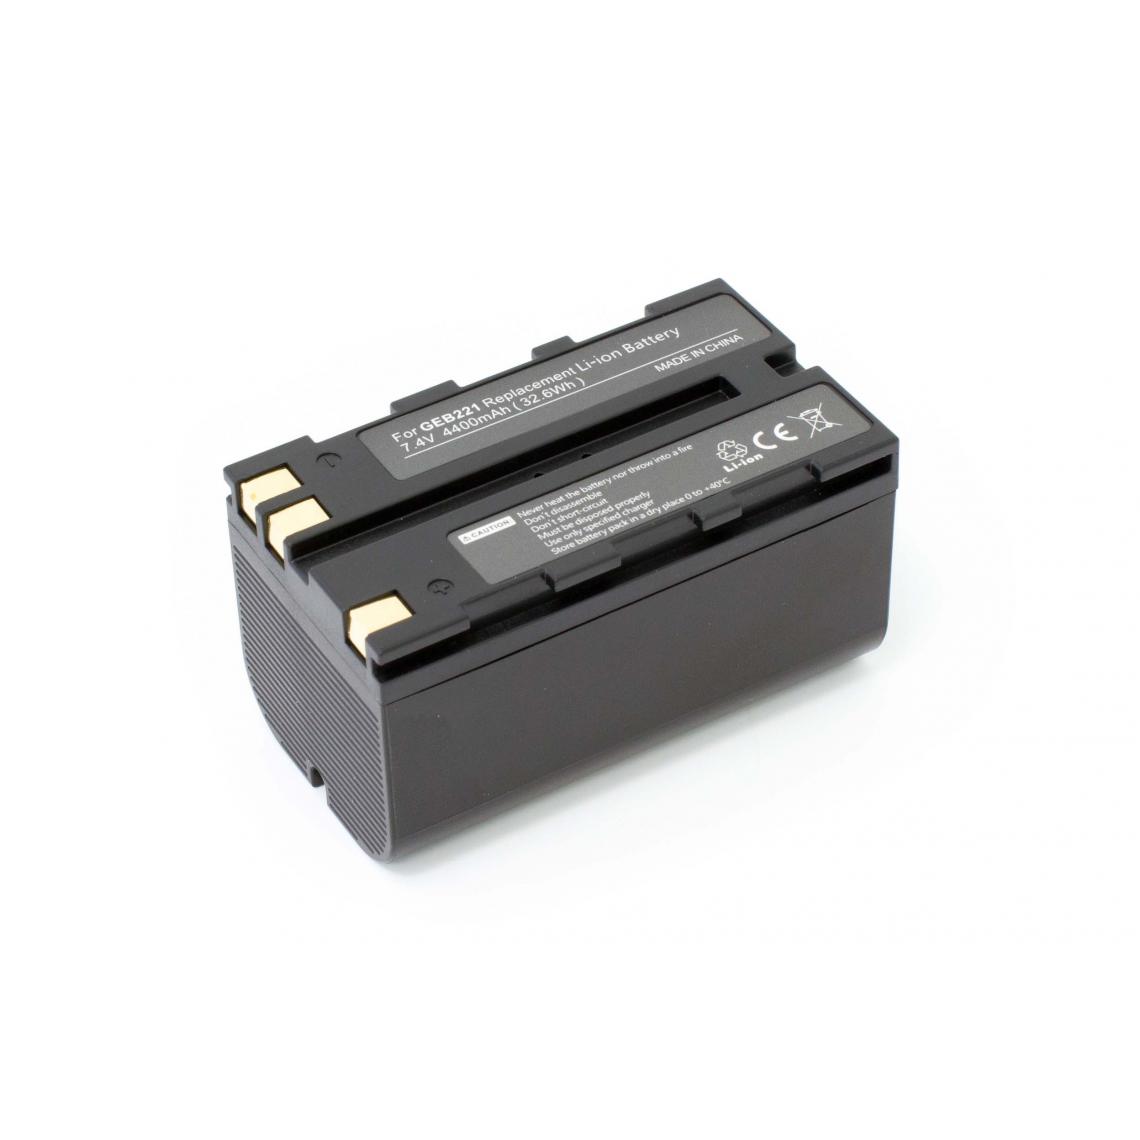 Vhbw - vhbw Batterie compatible avec Leica TC1102, TC1102C, TC1200 dispositif de mesure laser, outil de mesure (4400mAh, 7,4V, Li-ion) - Piles rechargeables